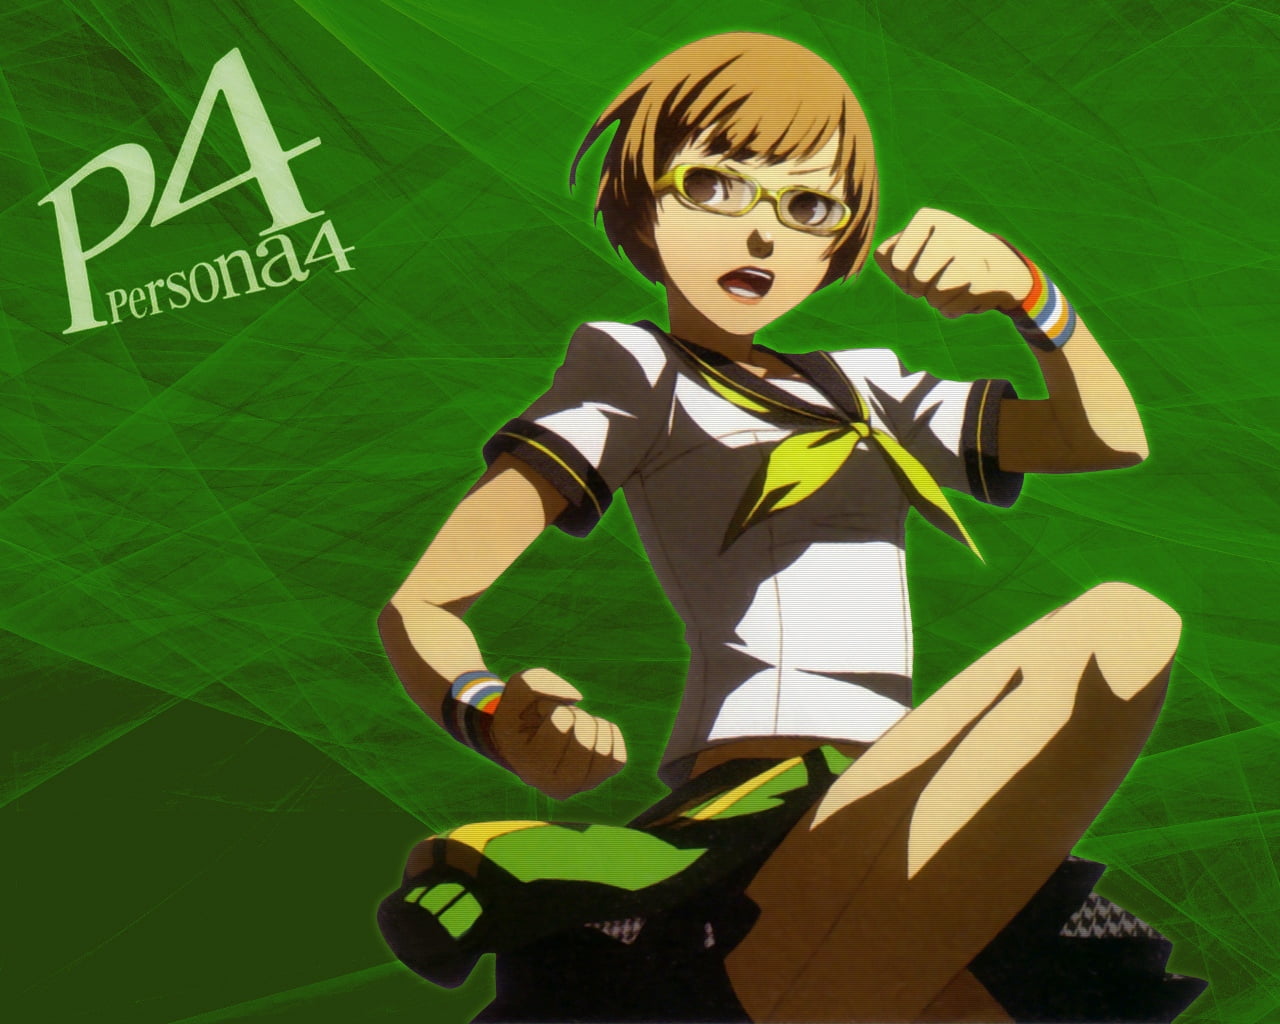 P4 Persona 4 anime character illustration, satonaka chie, girl